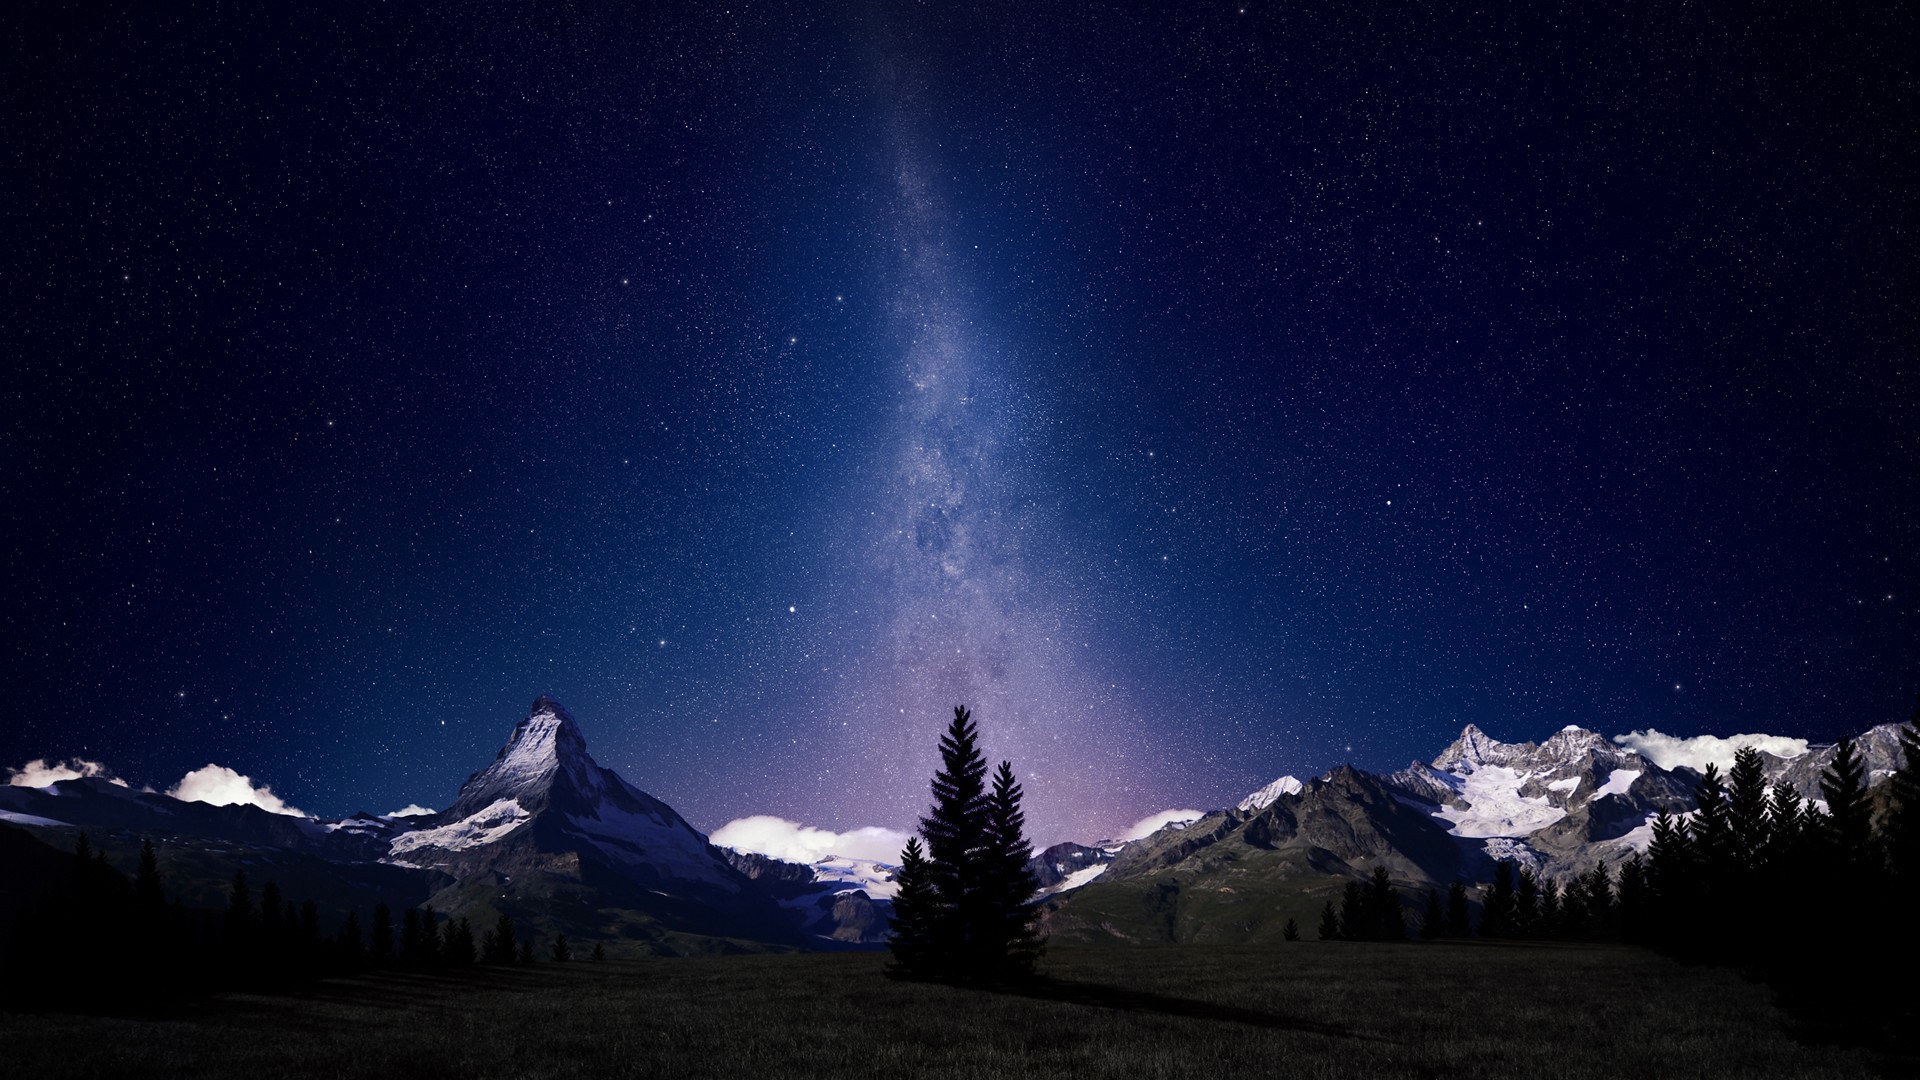 General 1920x1080 starry night forest mountains galaxy stars trees sky Milky Way space landscape night Swiss Alps space art blue Matterhorn